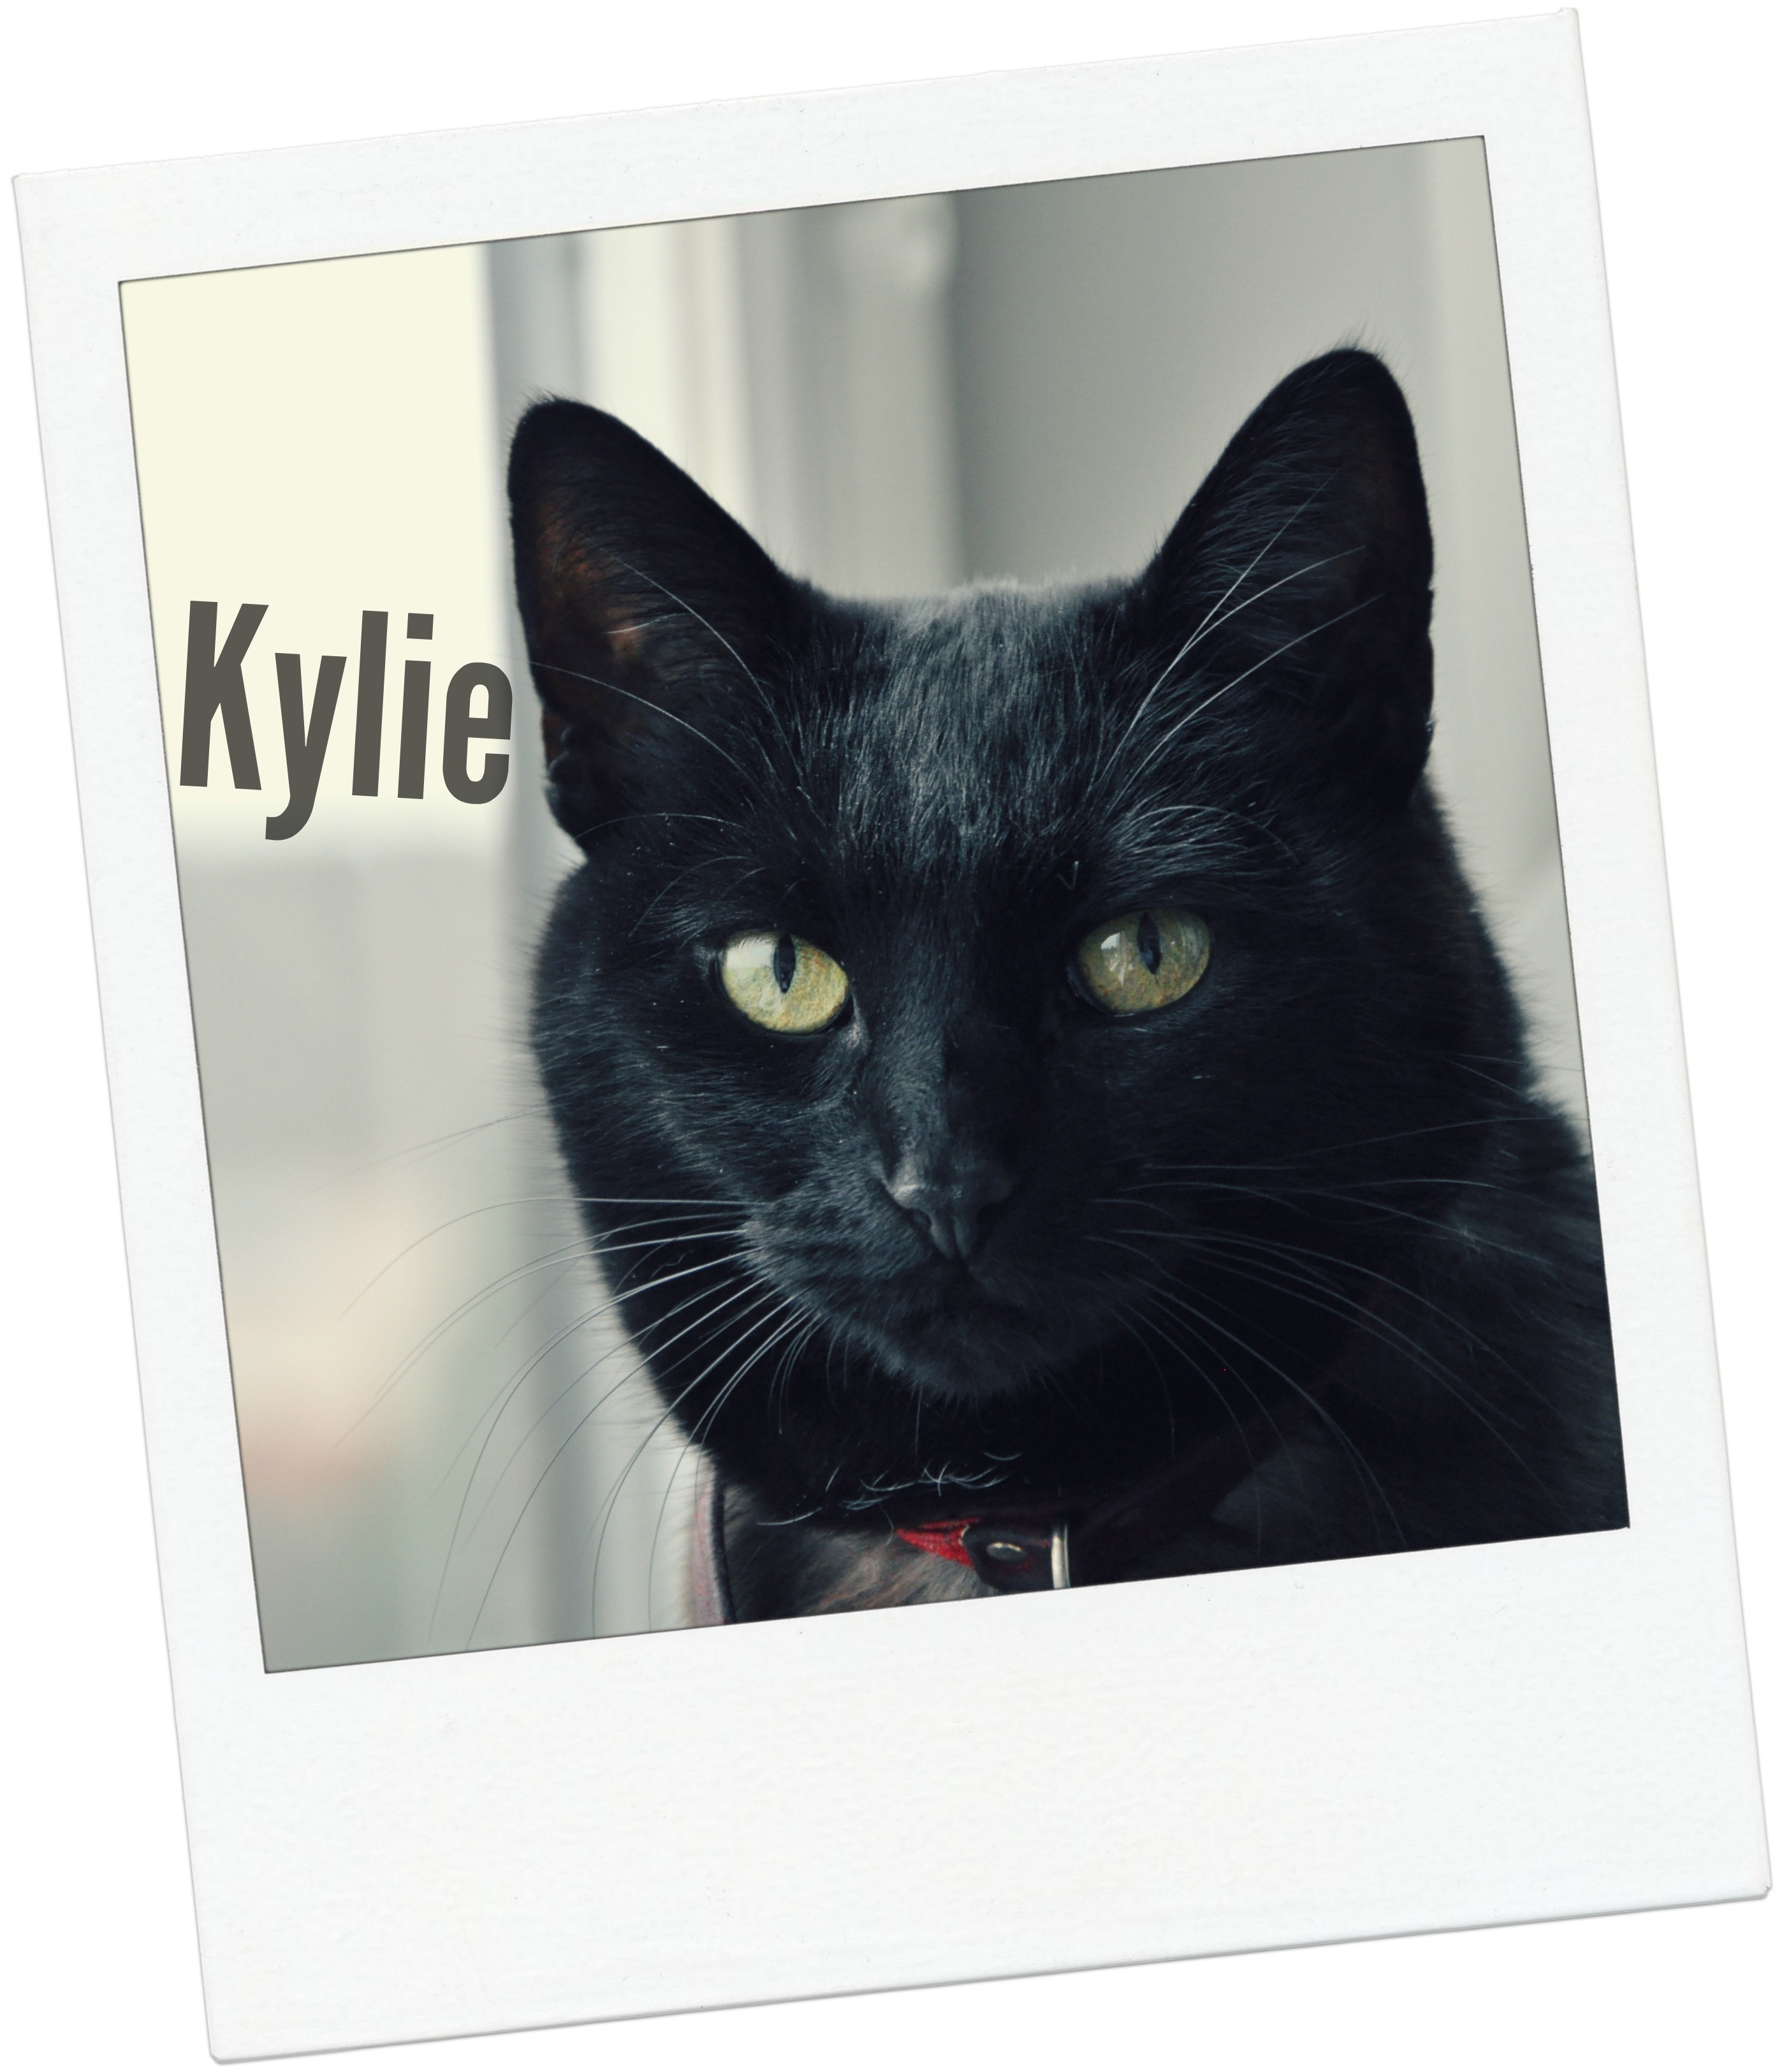 Kylie blog